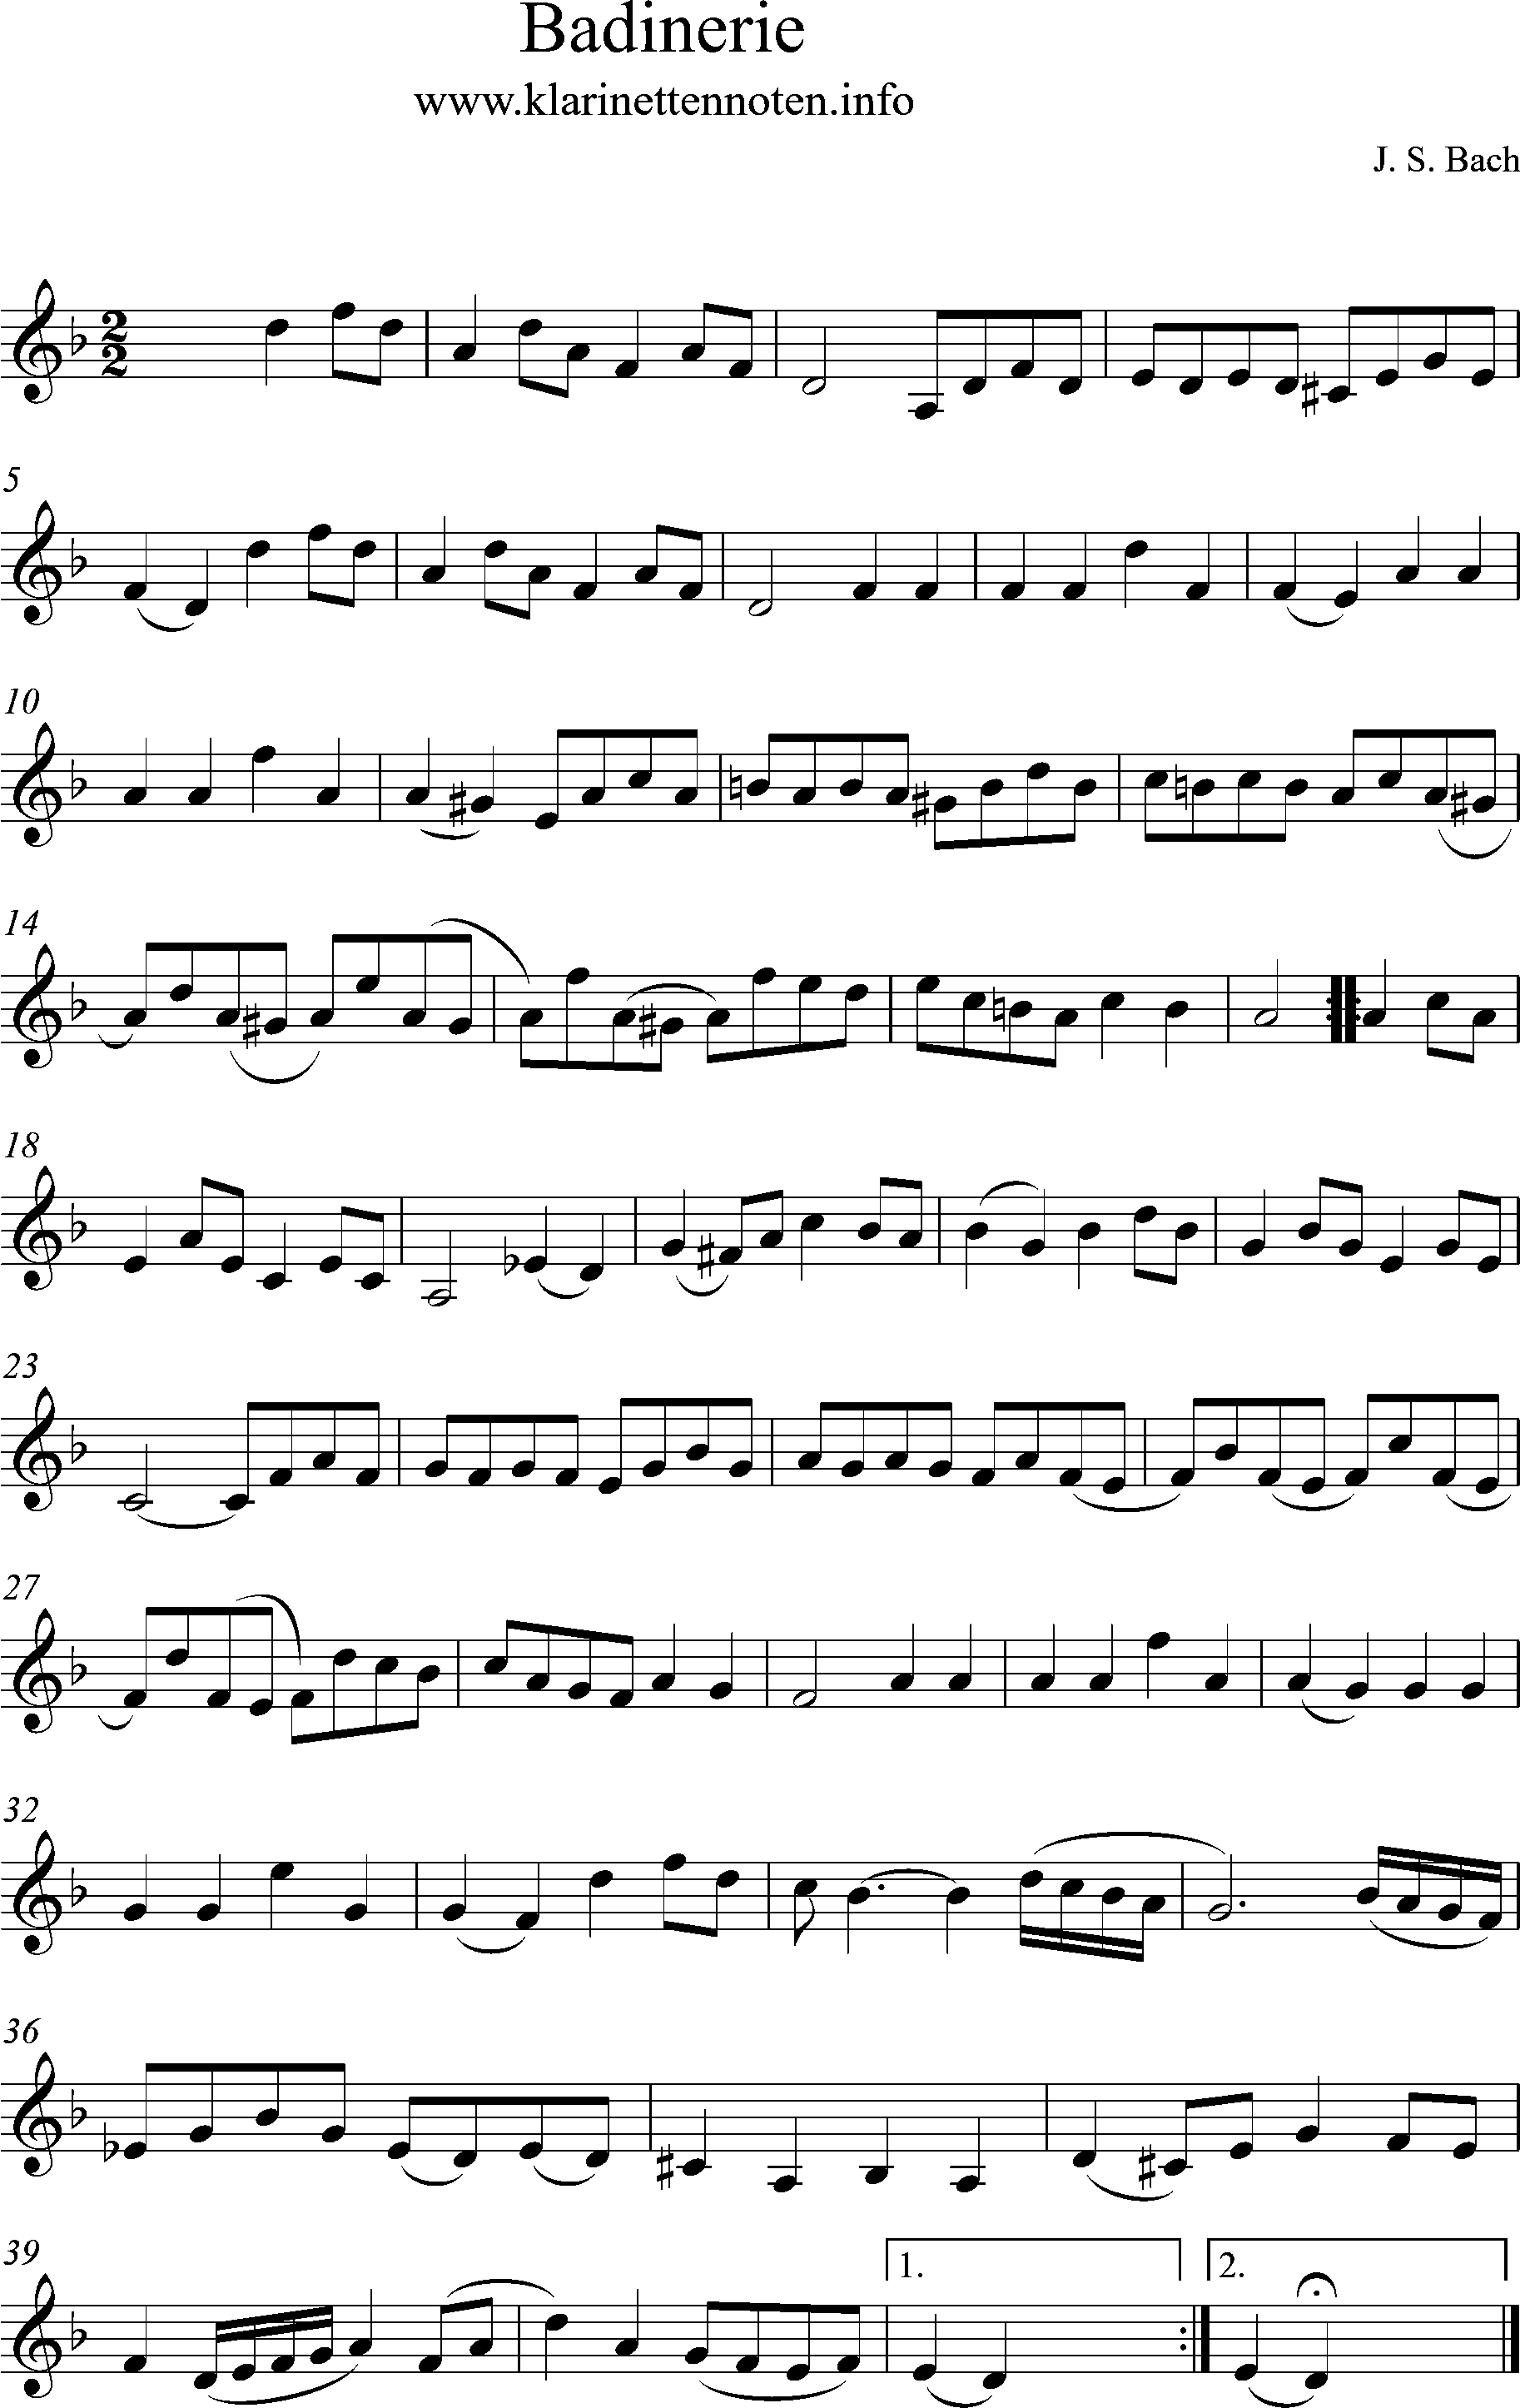 Badinerie Bach , Clarinet, Klarinette, dm